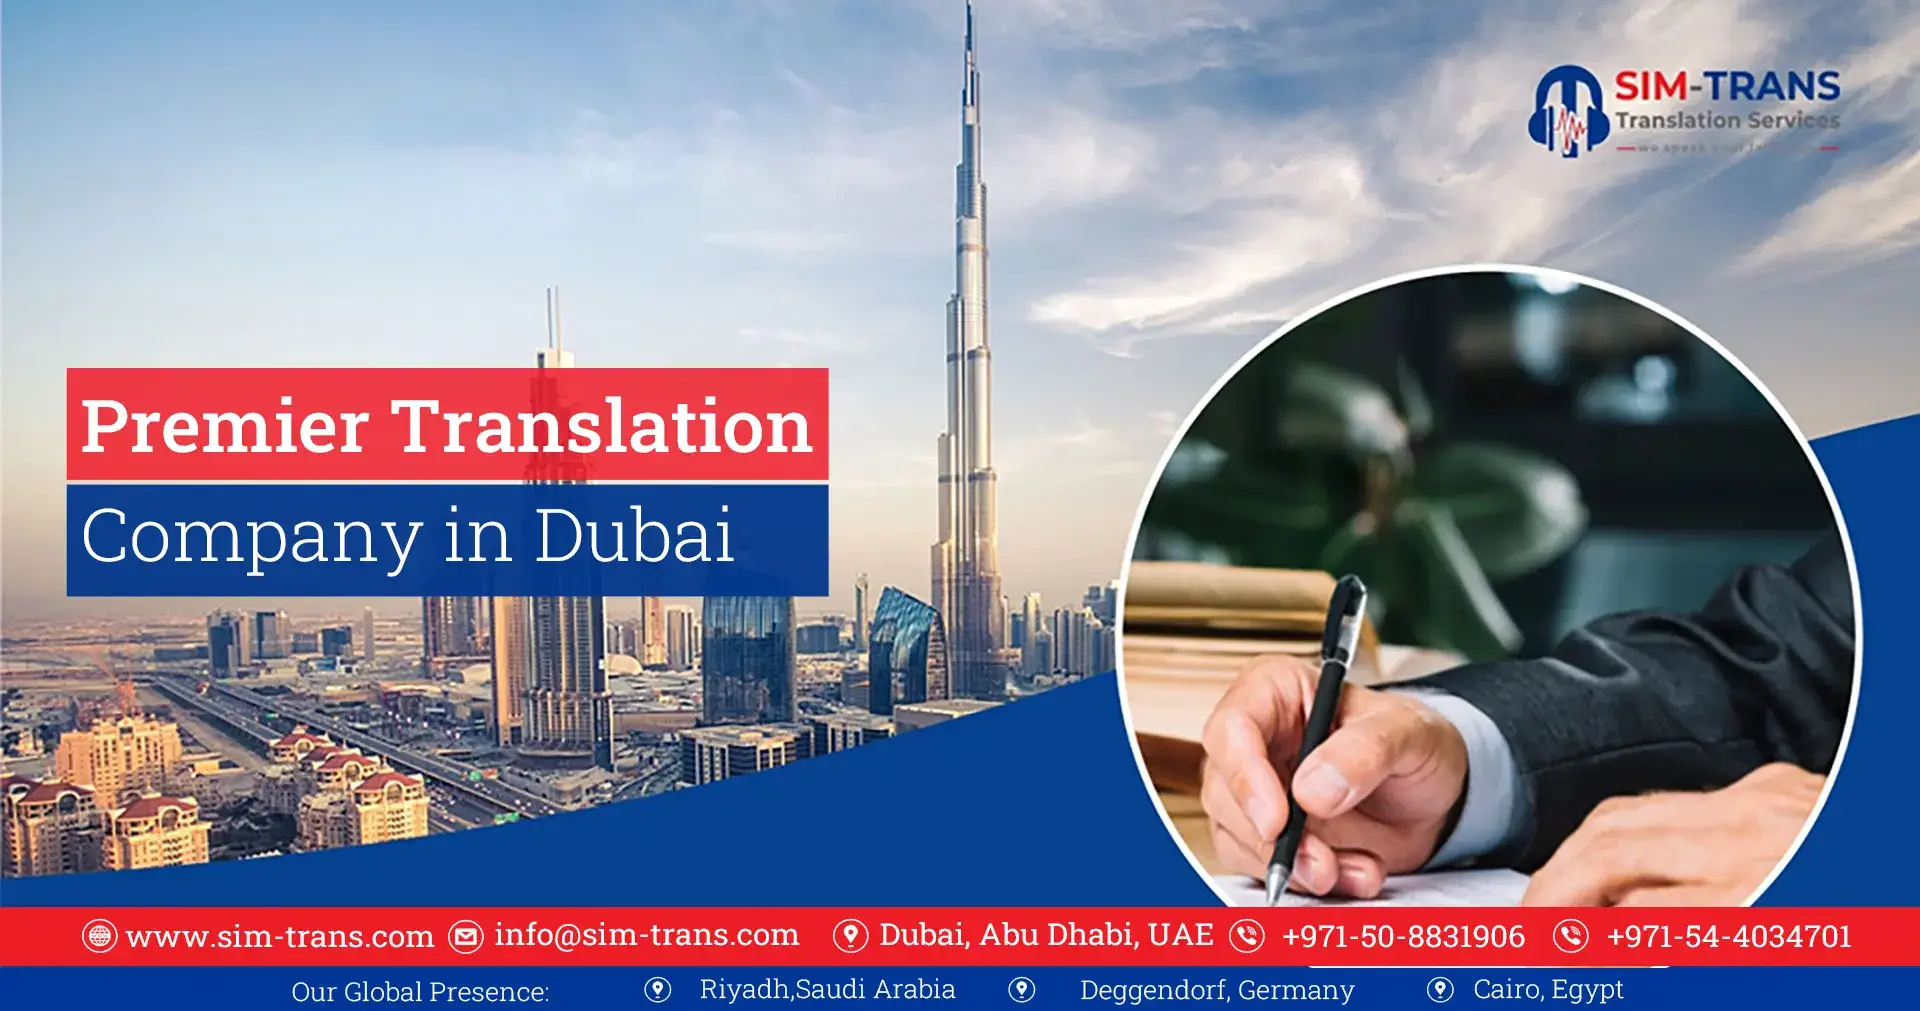 Sim-trans Translation Company in Dubai, UAE